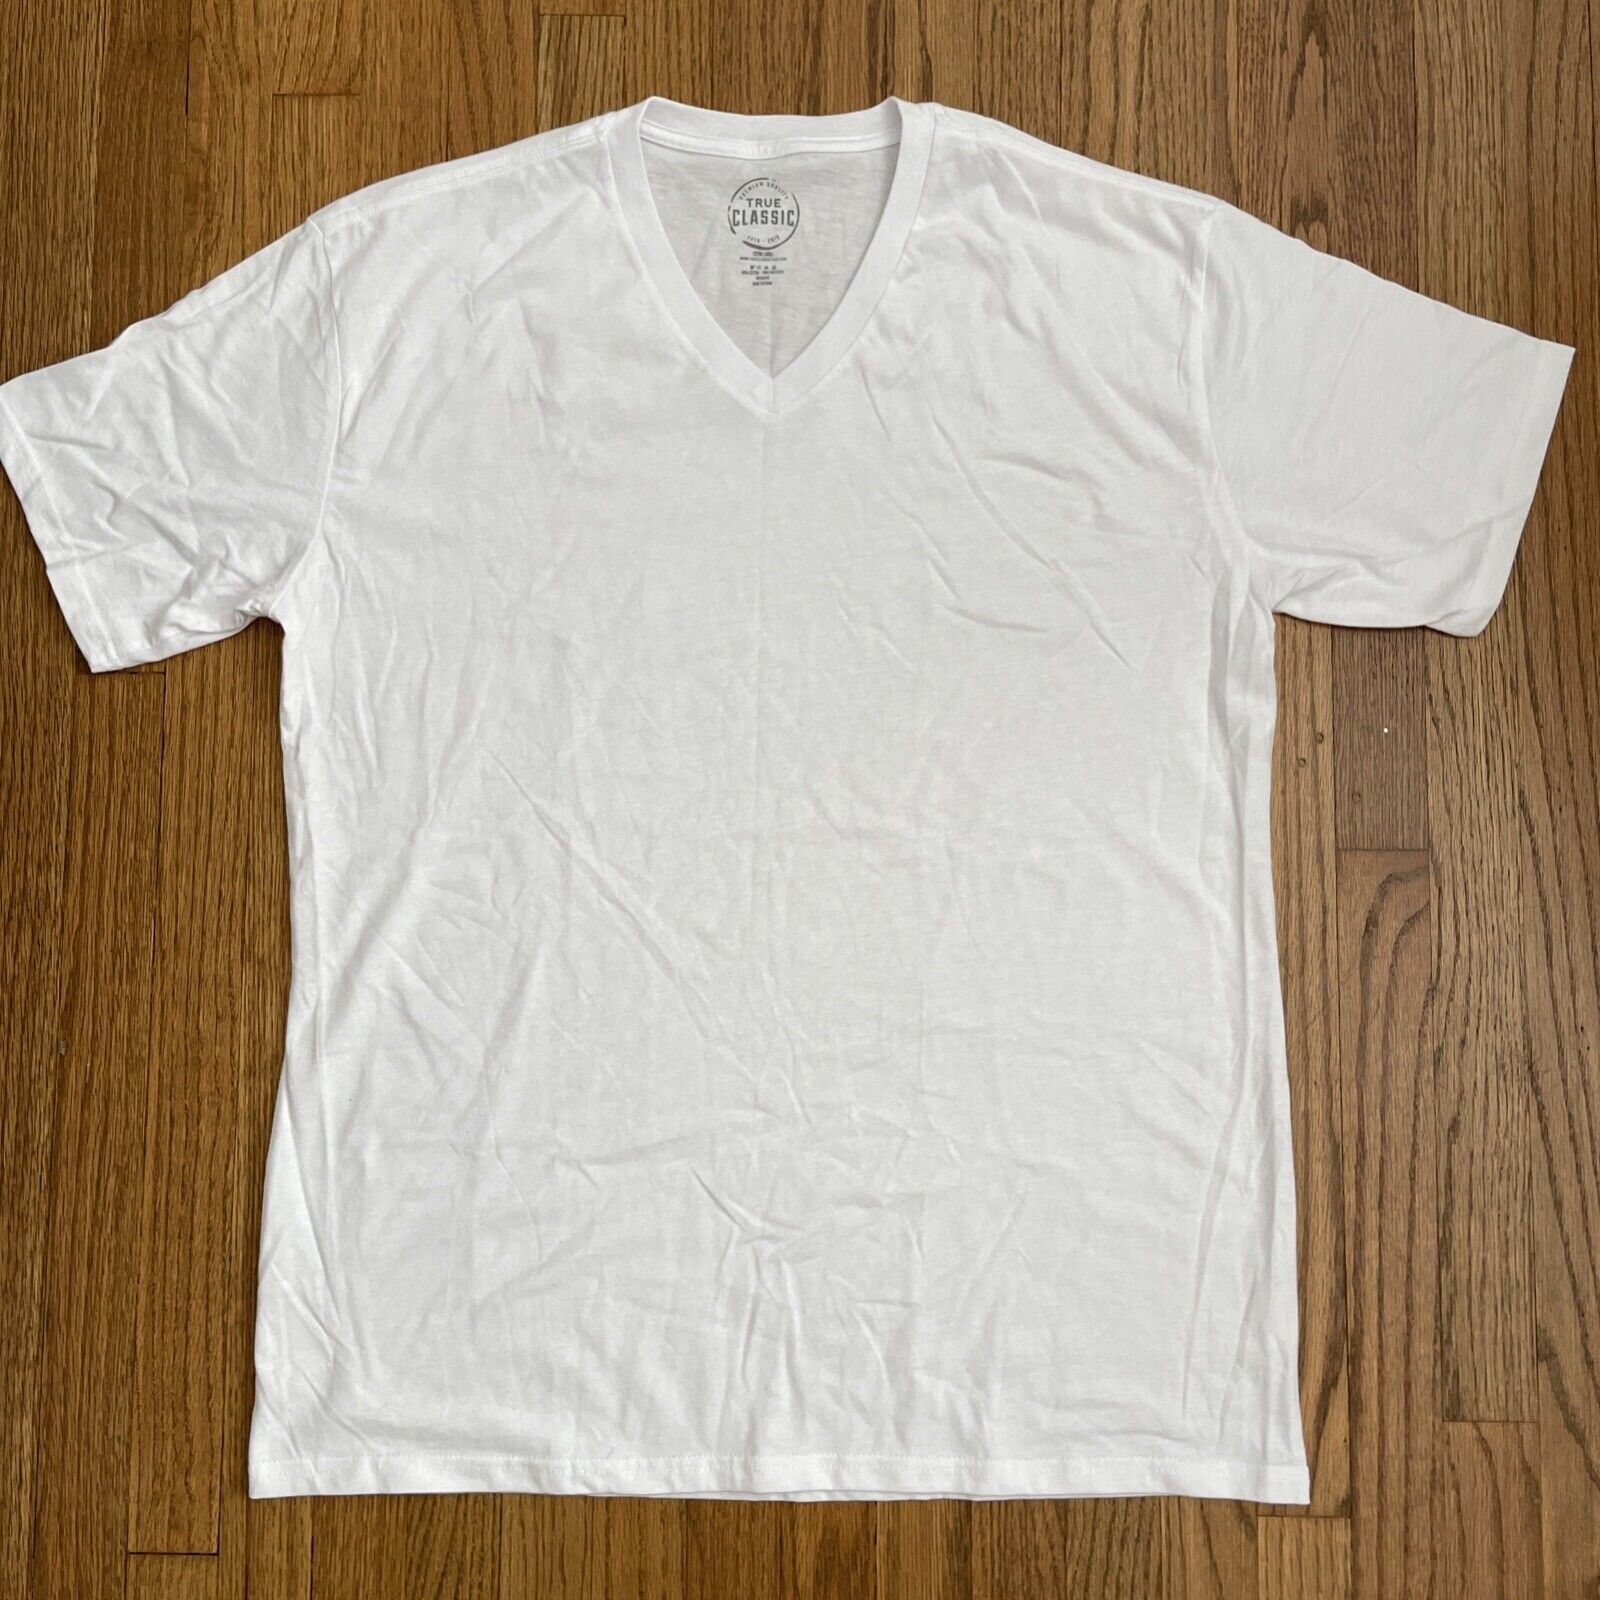 True Classic Premium Quality * V-NECK * T Tee Shirt WHITE Men\'s EXTRA LARGE XL